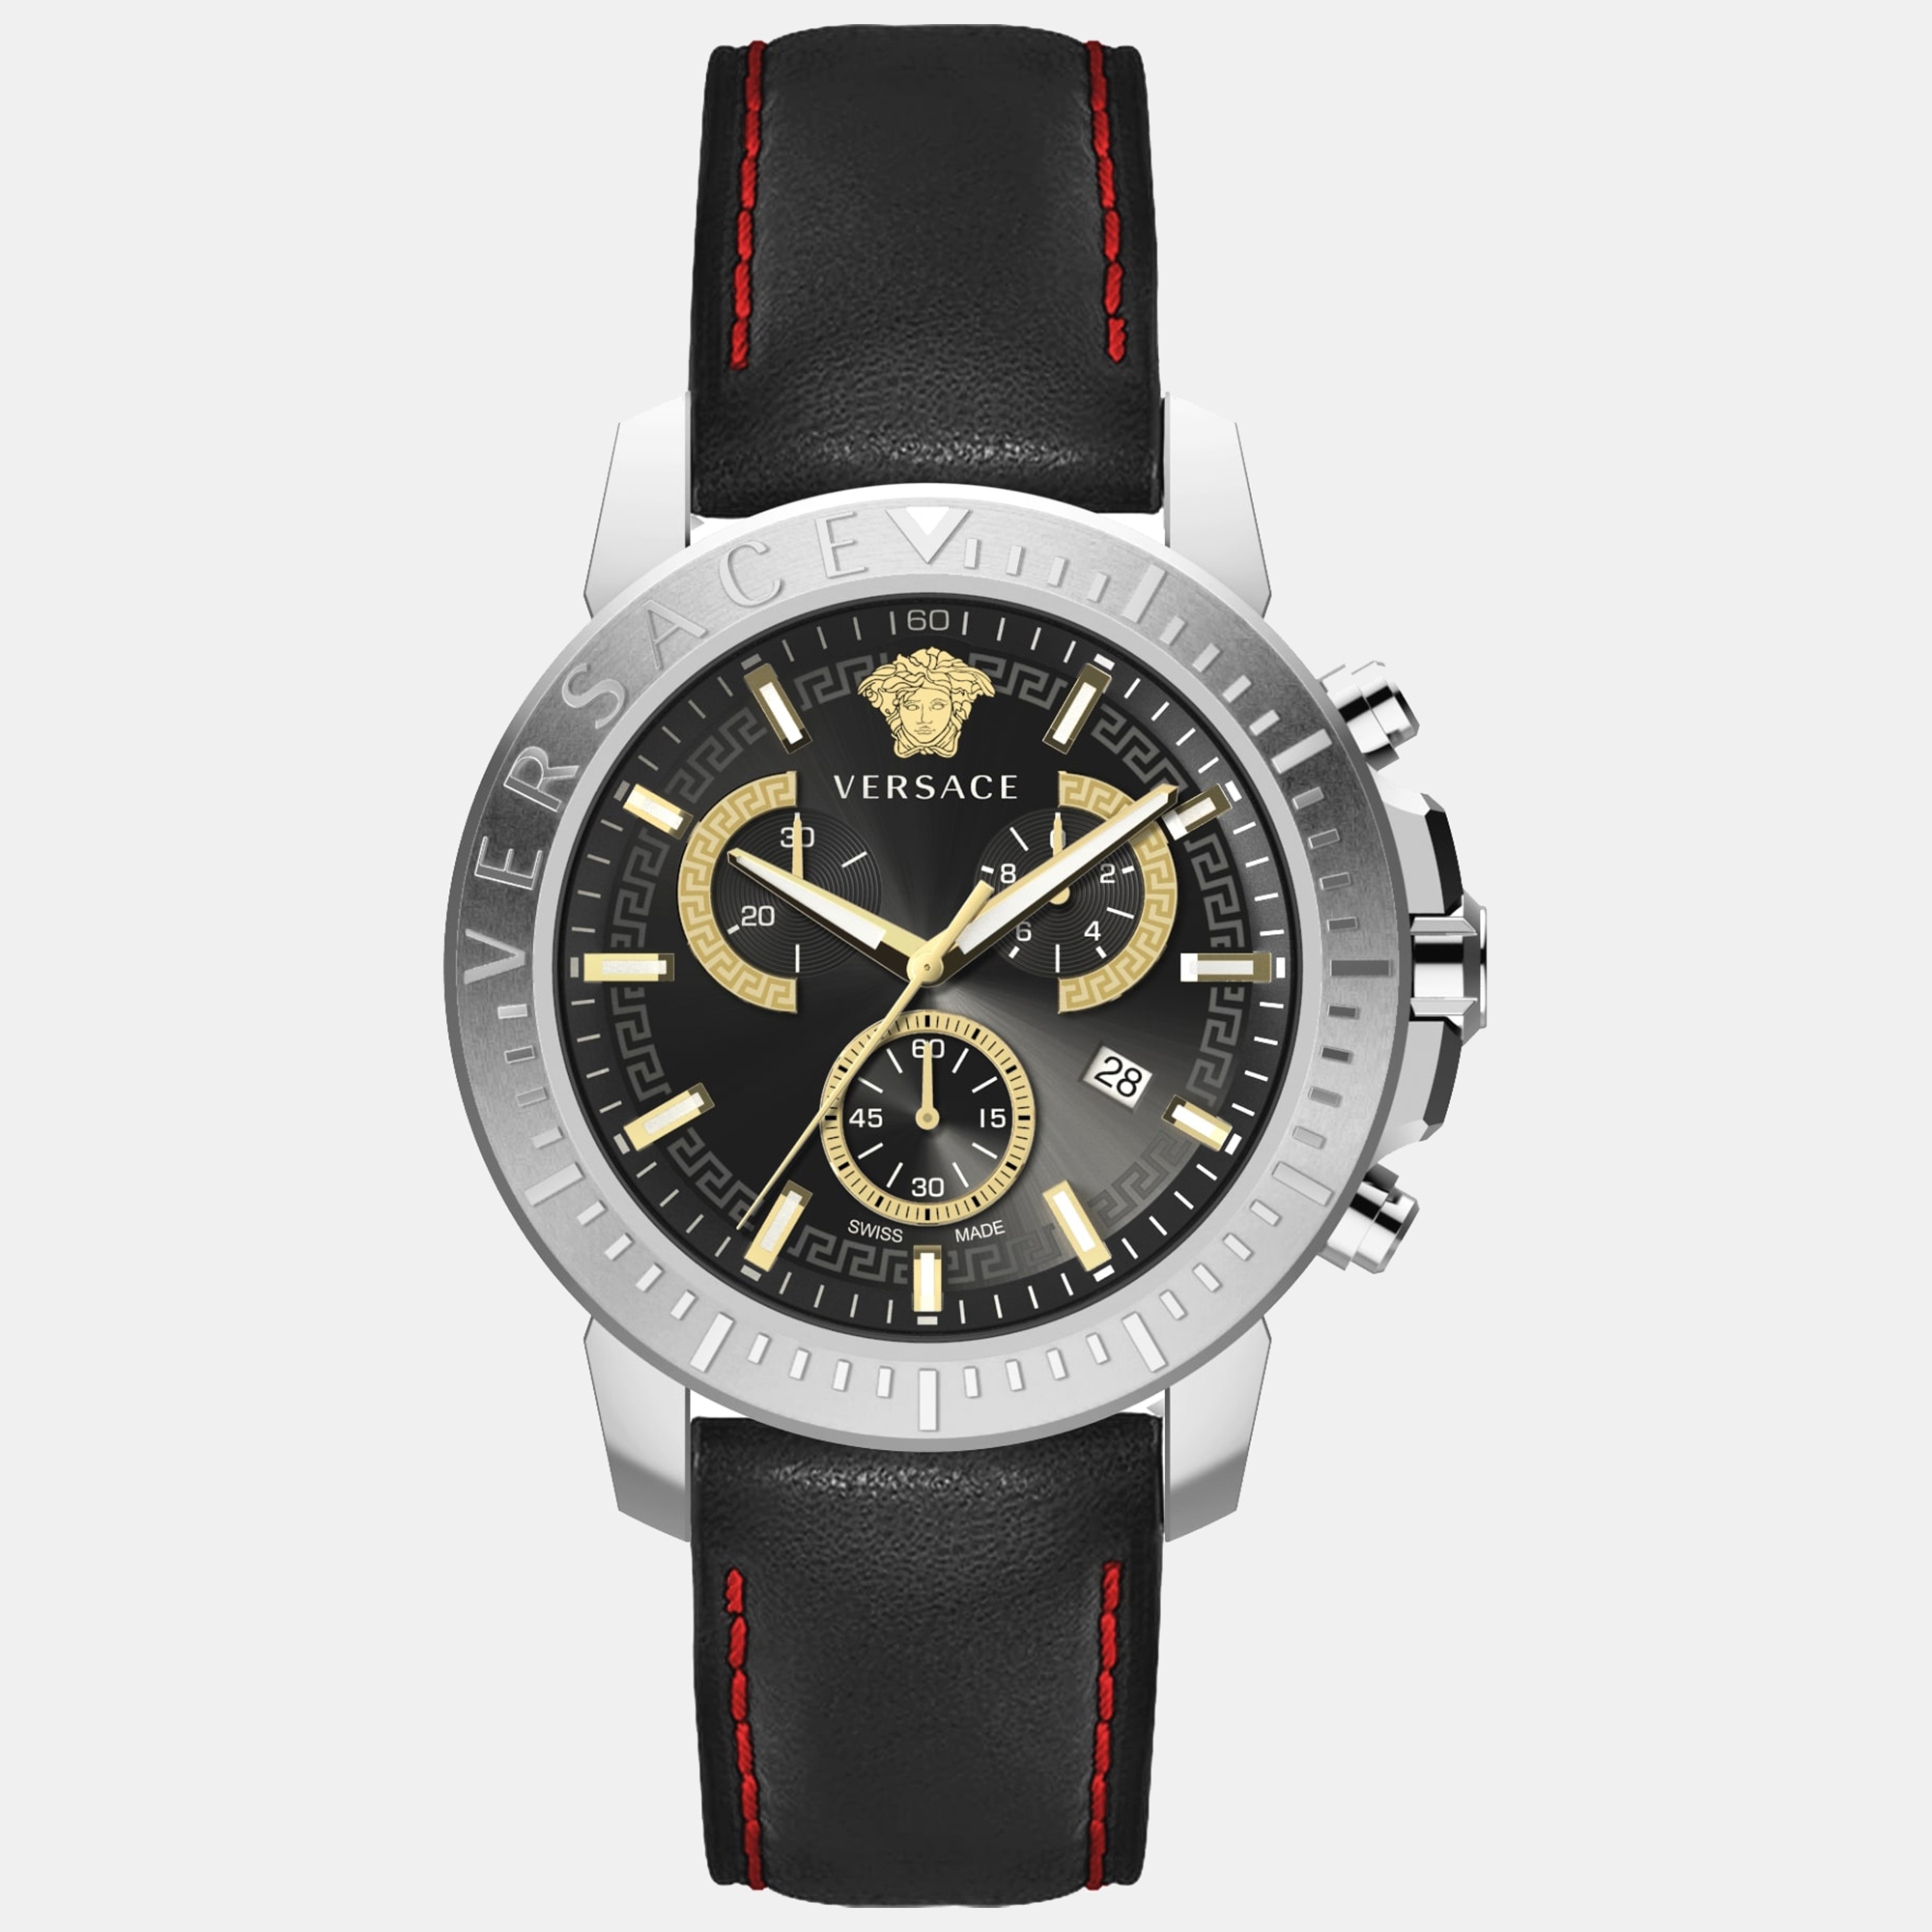 

Versace Men's VE2E00121 New Chrono  Quartz Watch, Black